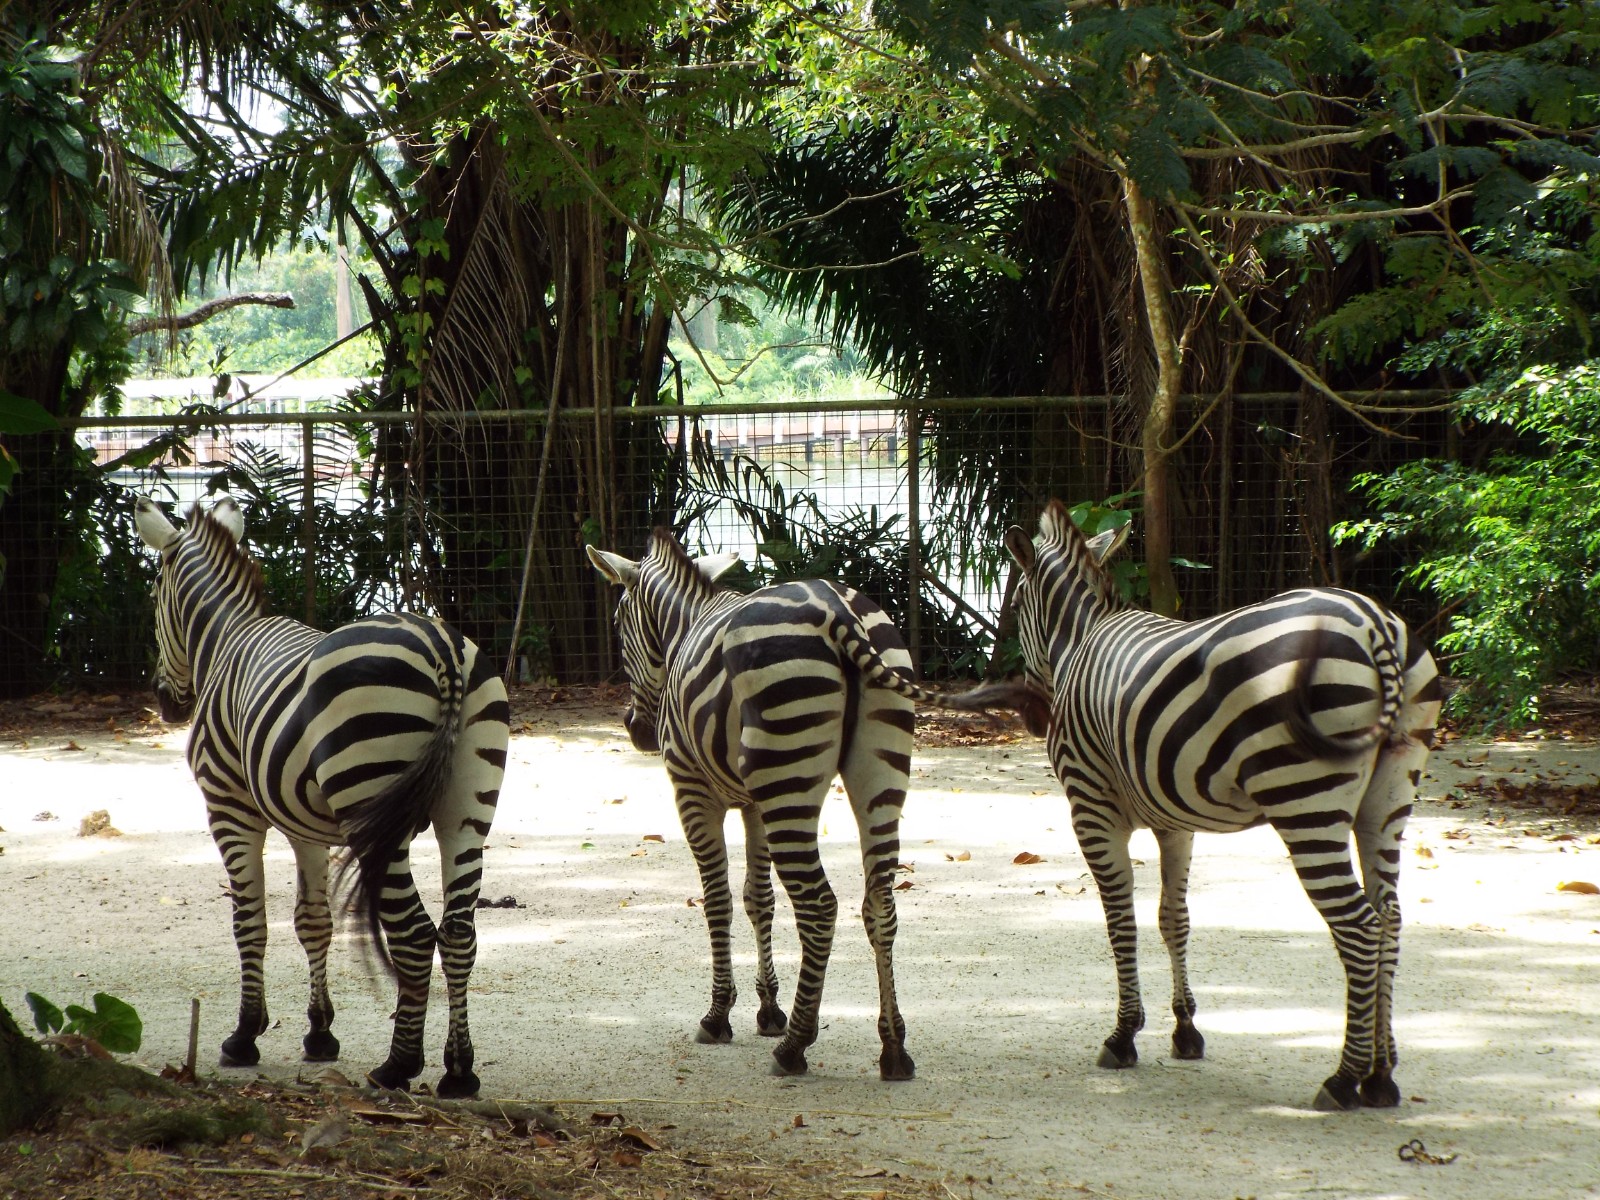 Zebras bottoms up